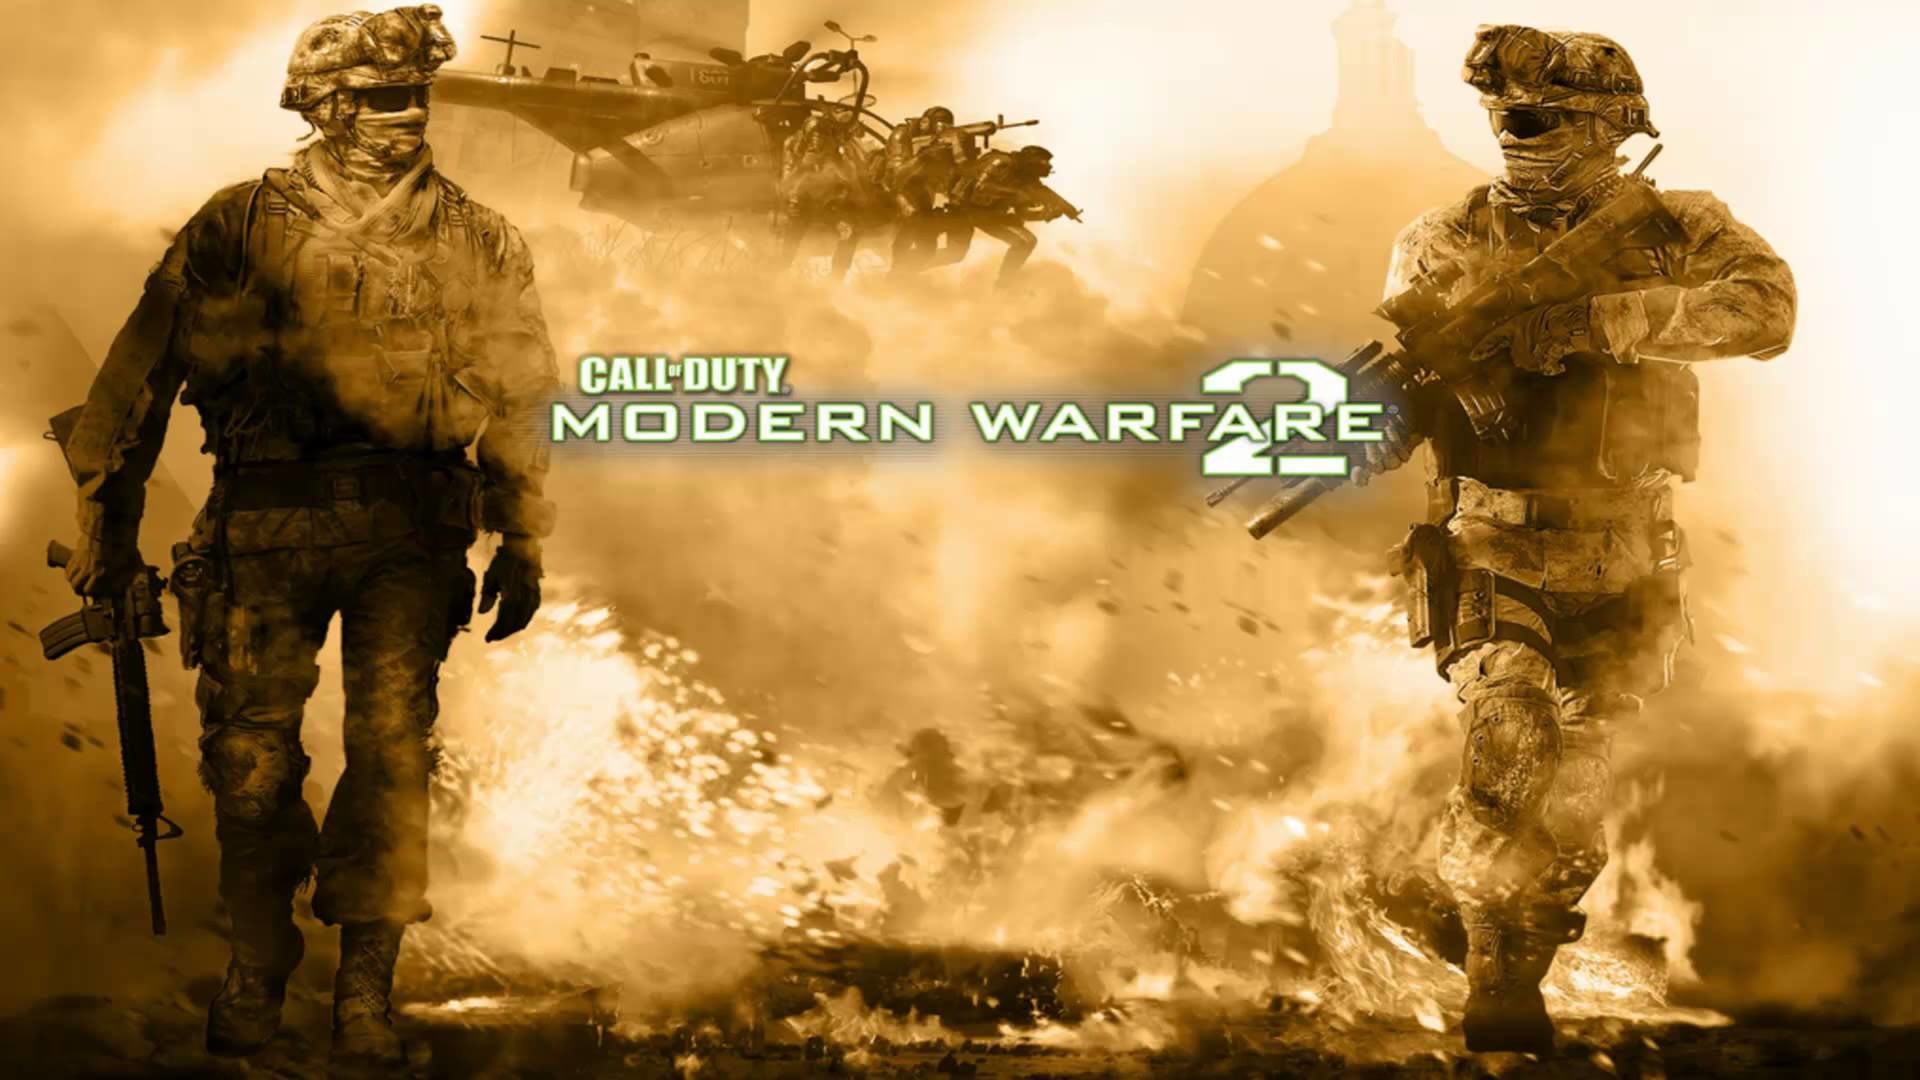 1920x1080 Call of Duty Modern Warfare 2 Wallpaper [Full-HD] - YouTube